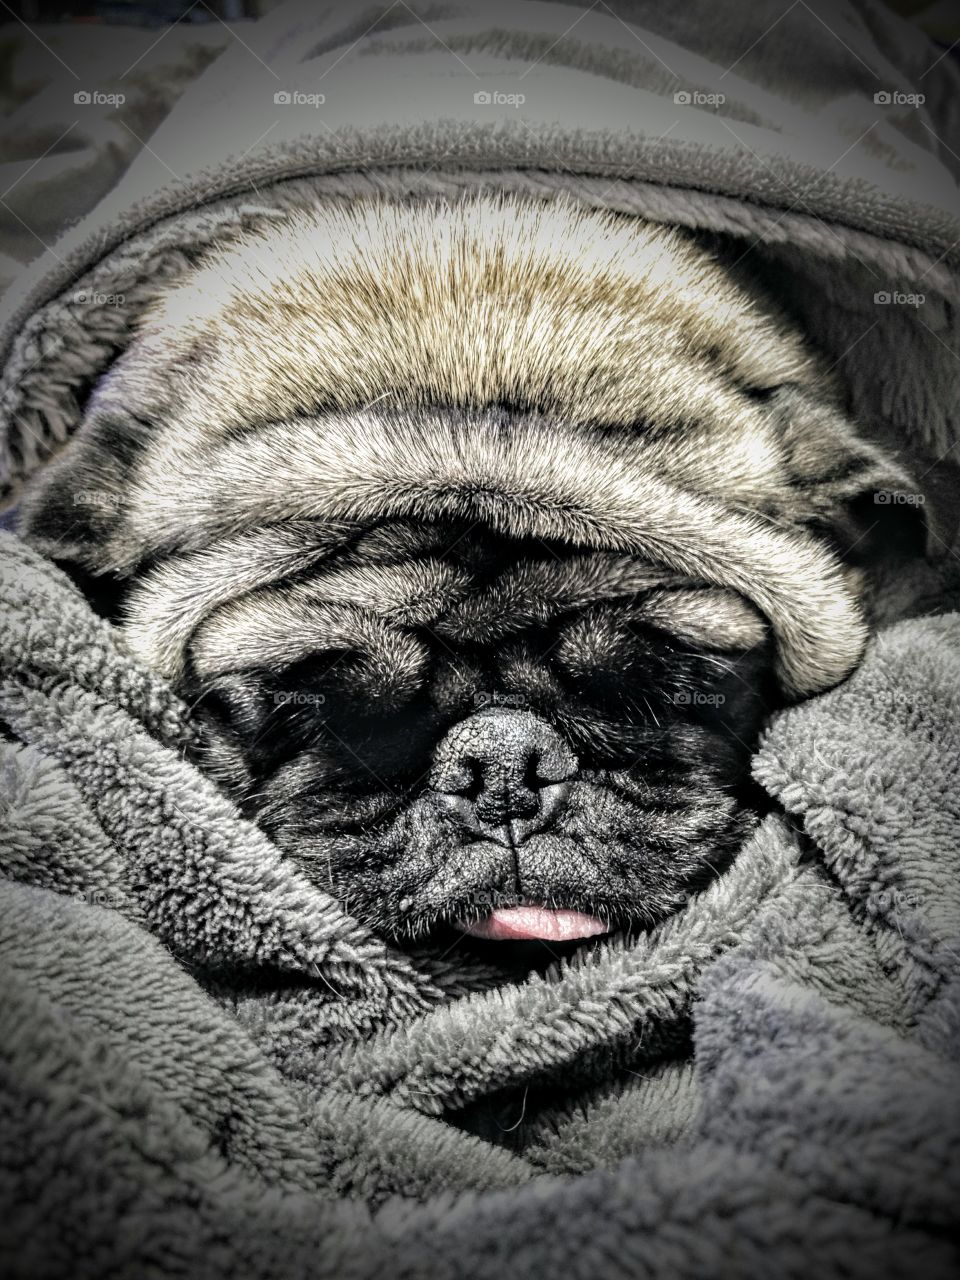 Snug as a pug in a rug